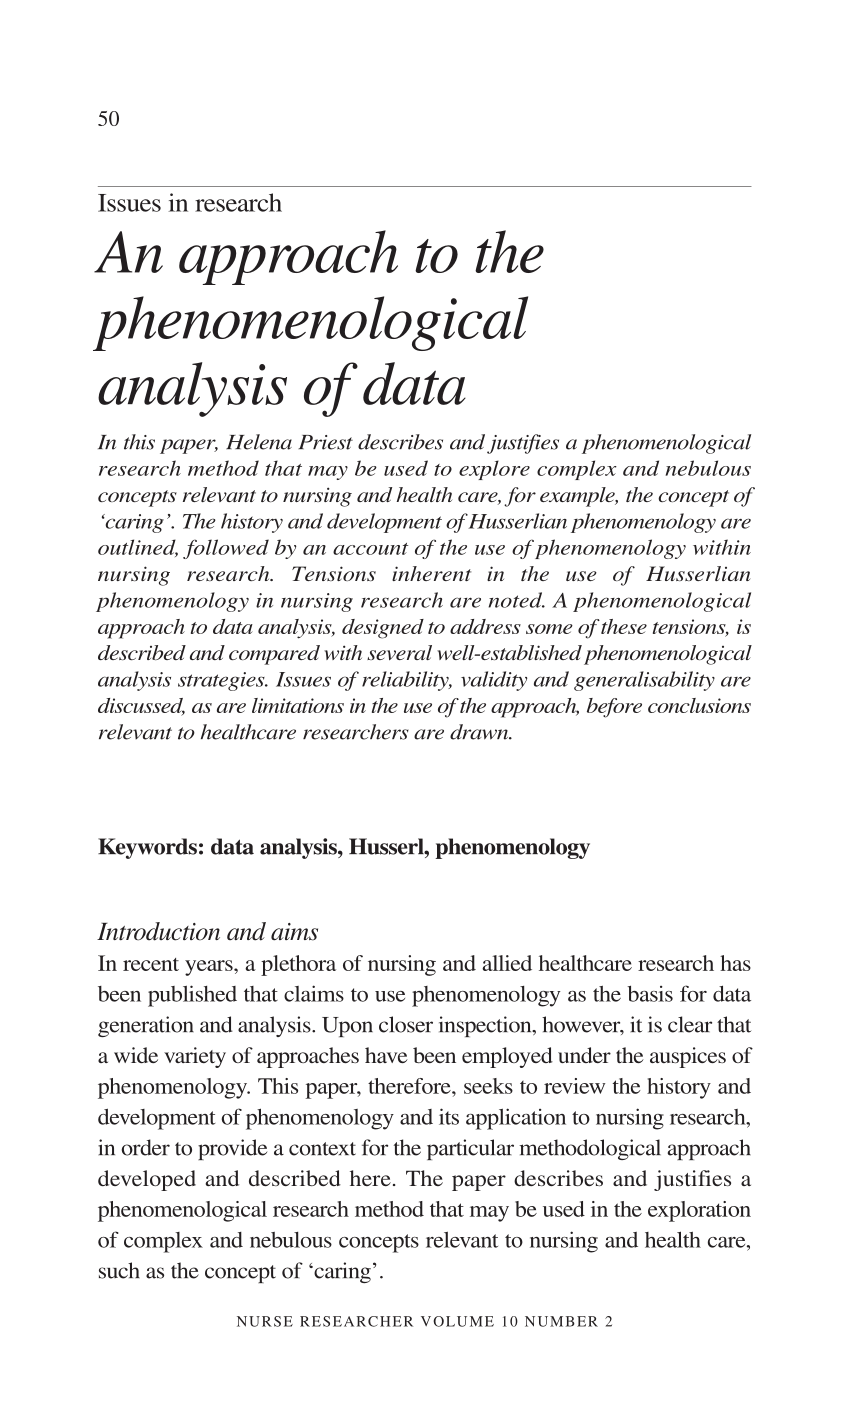 data analysis of phenomenological research